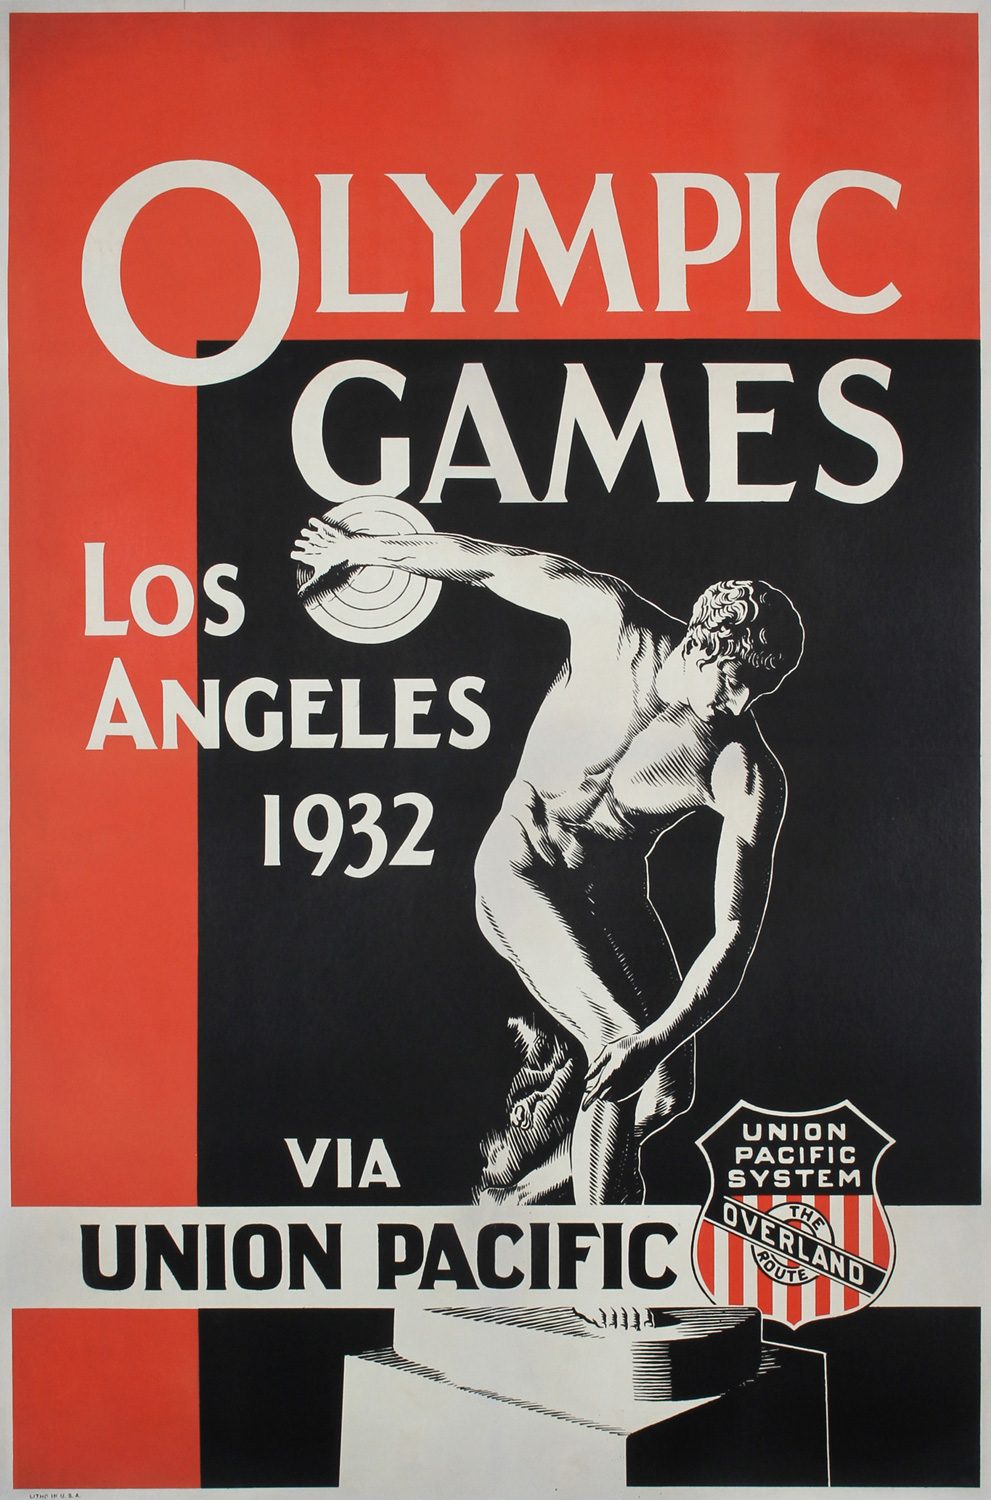 Olympics Games Los Angeles via Union Pacific, 1932